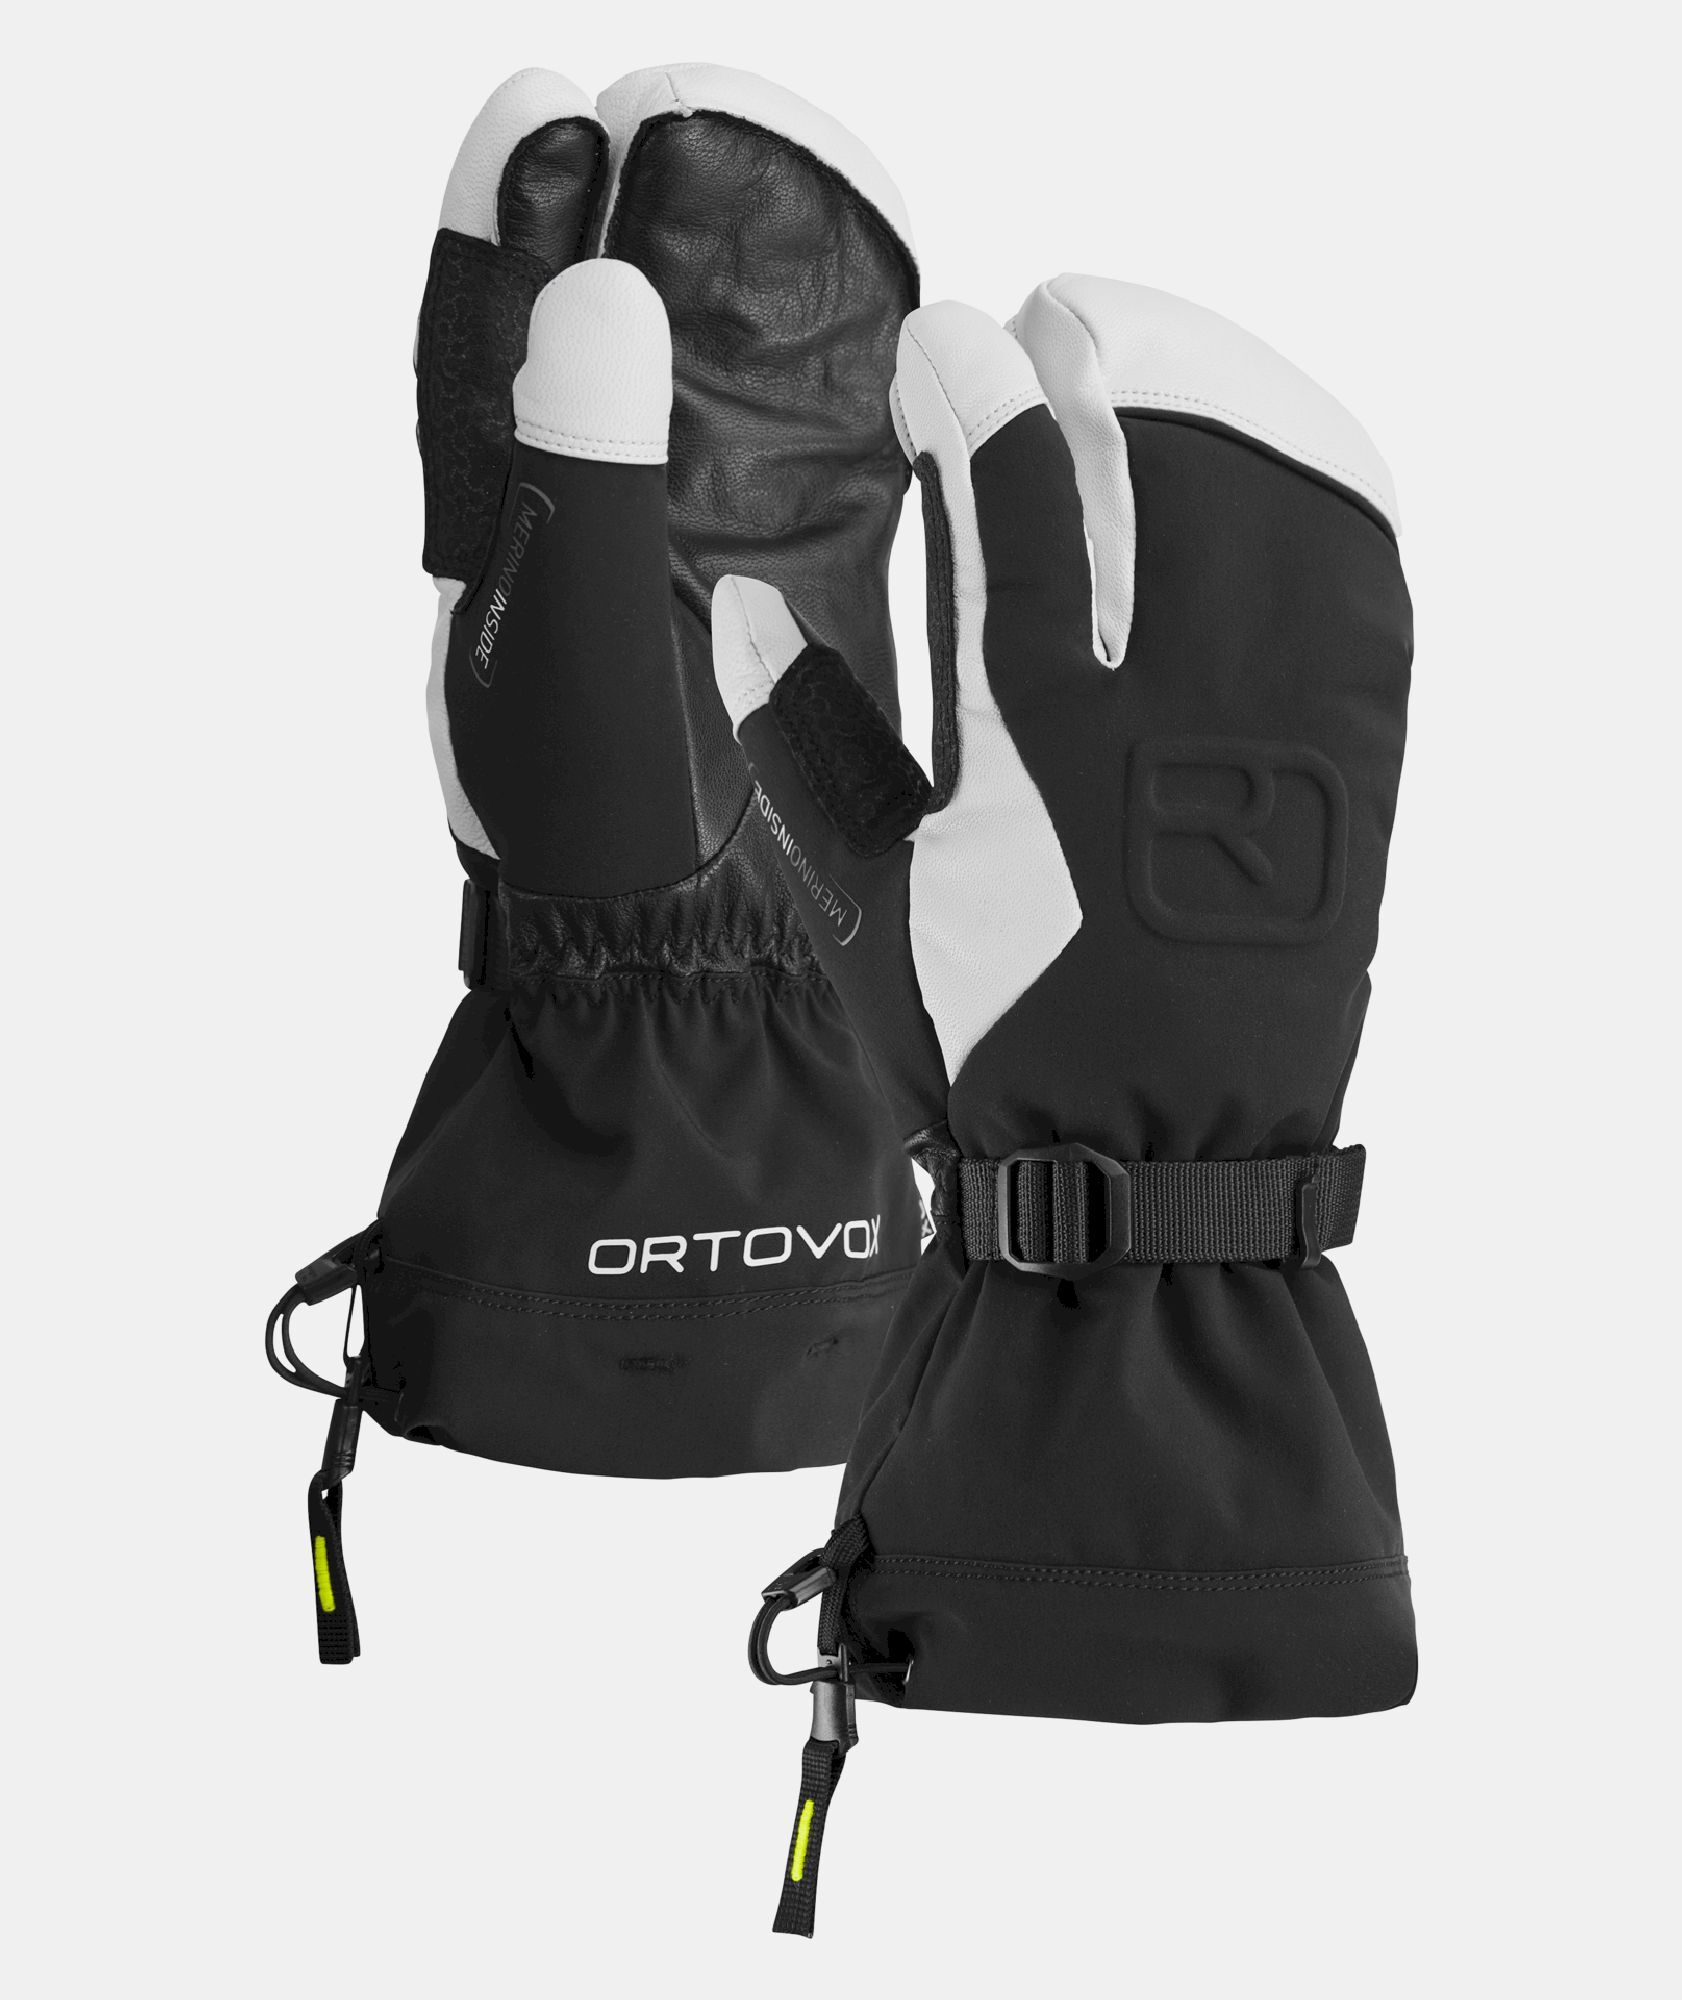 Ortovox Merino Freeride 3 Finger - Ski gloves - Men's